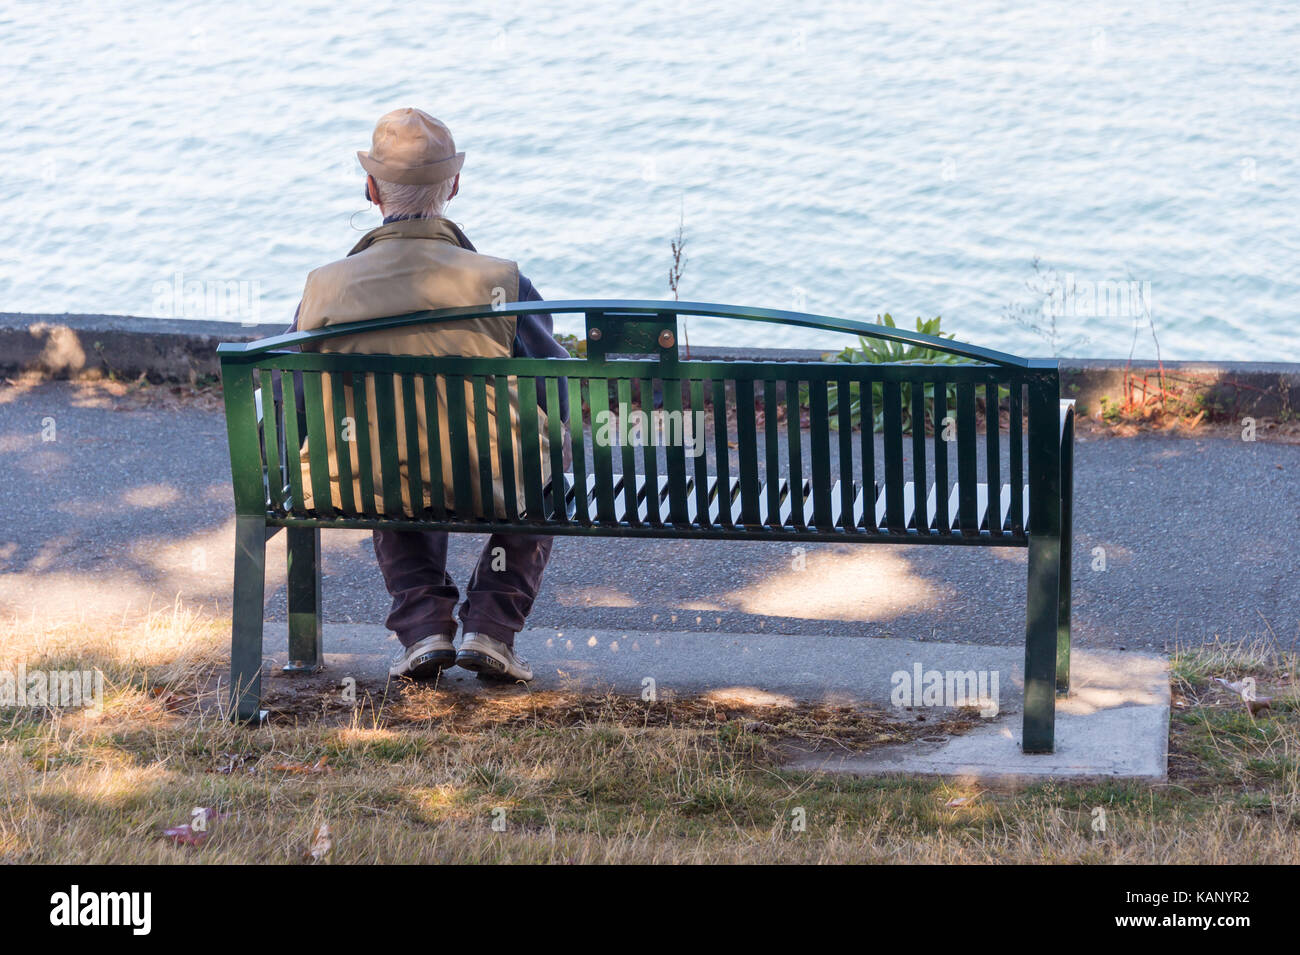 Victoria, BC, Canada - 11 September 2017: Senior man sitting on a bench on David Foster Way Stock Photo